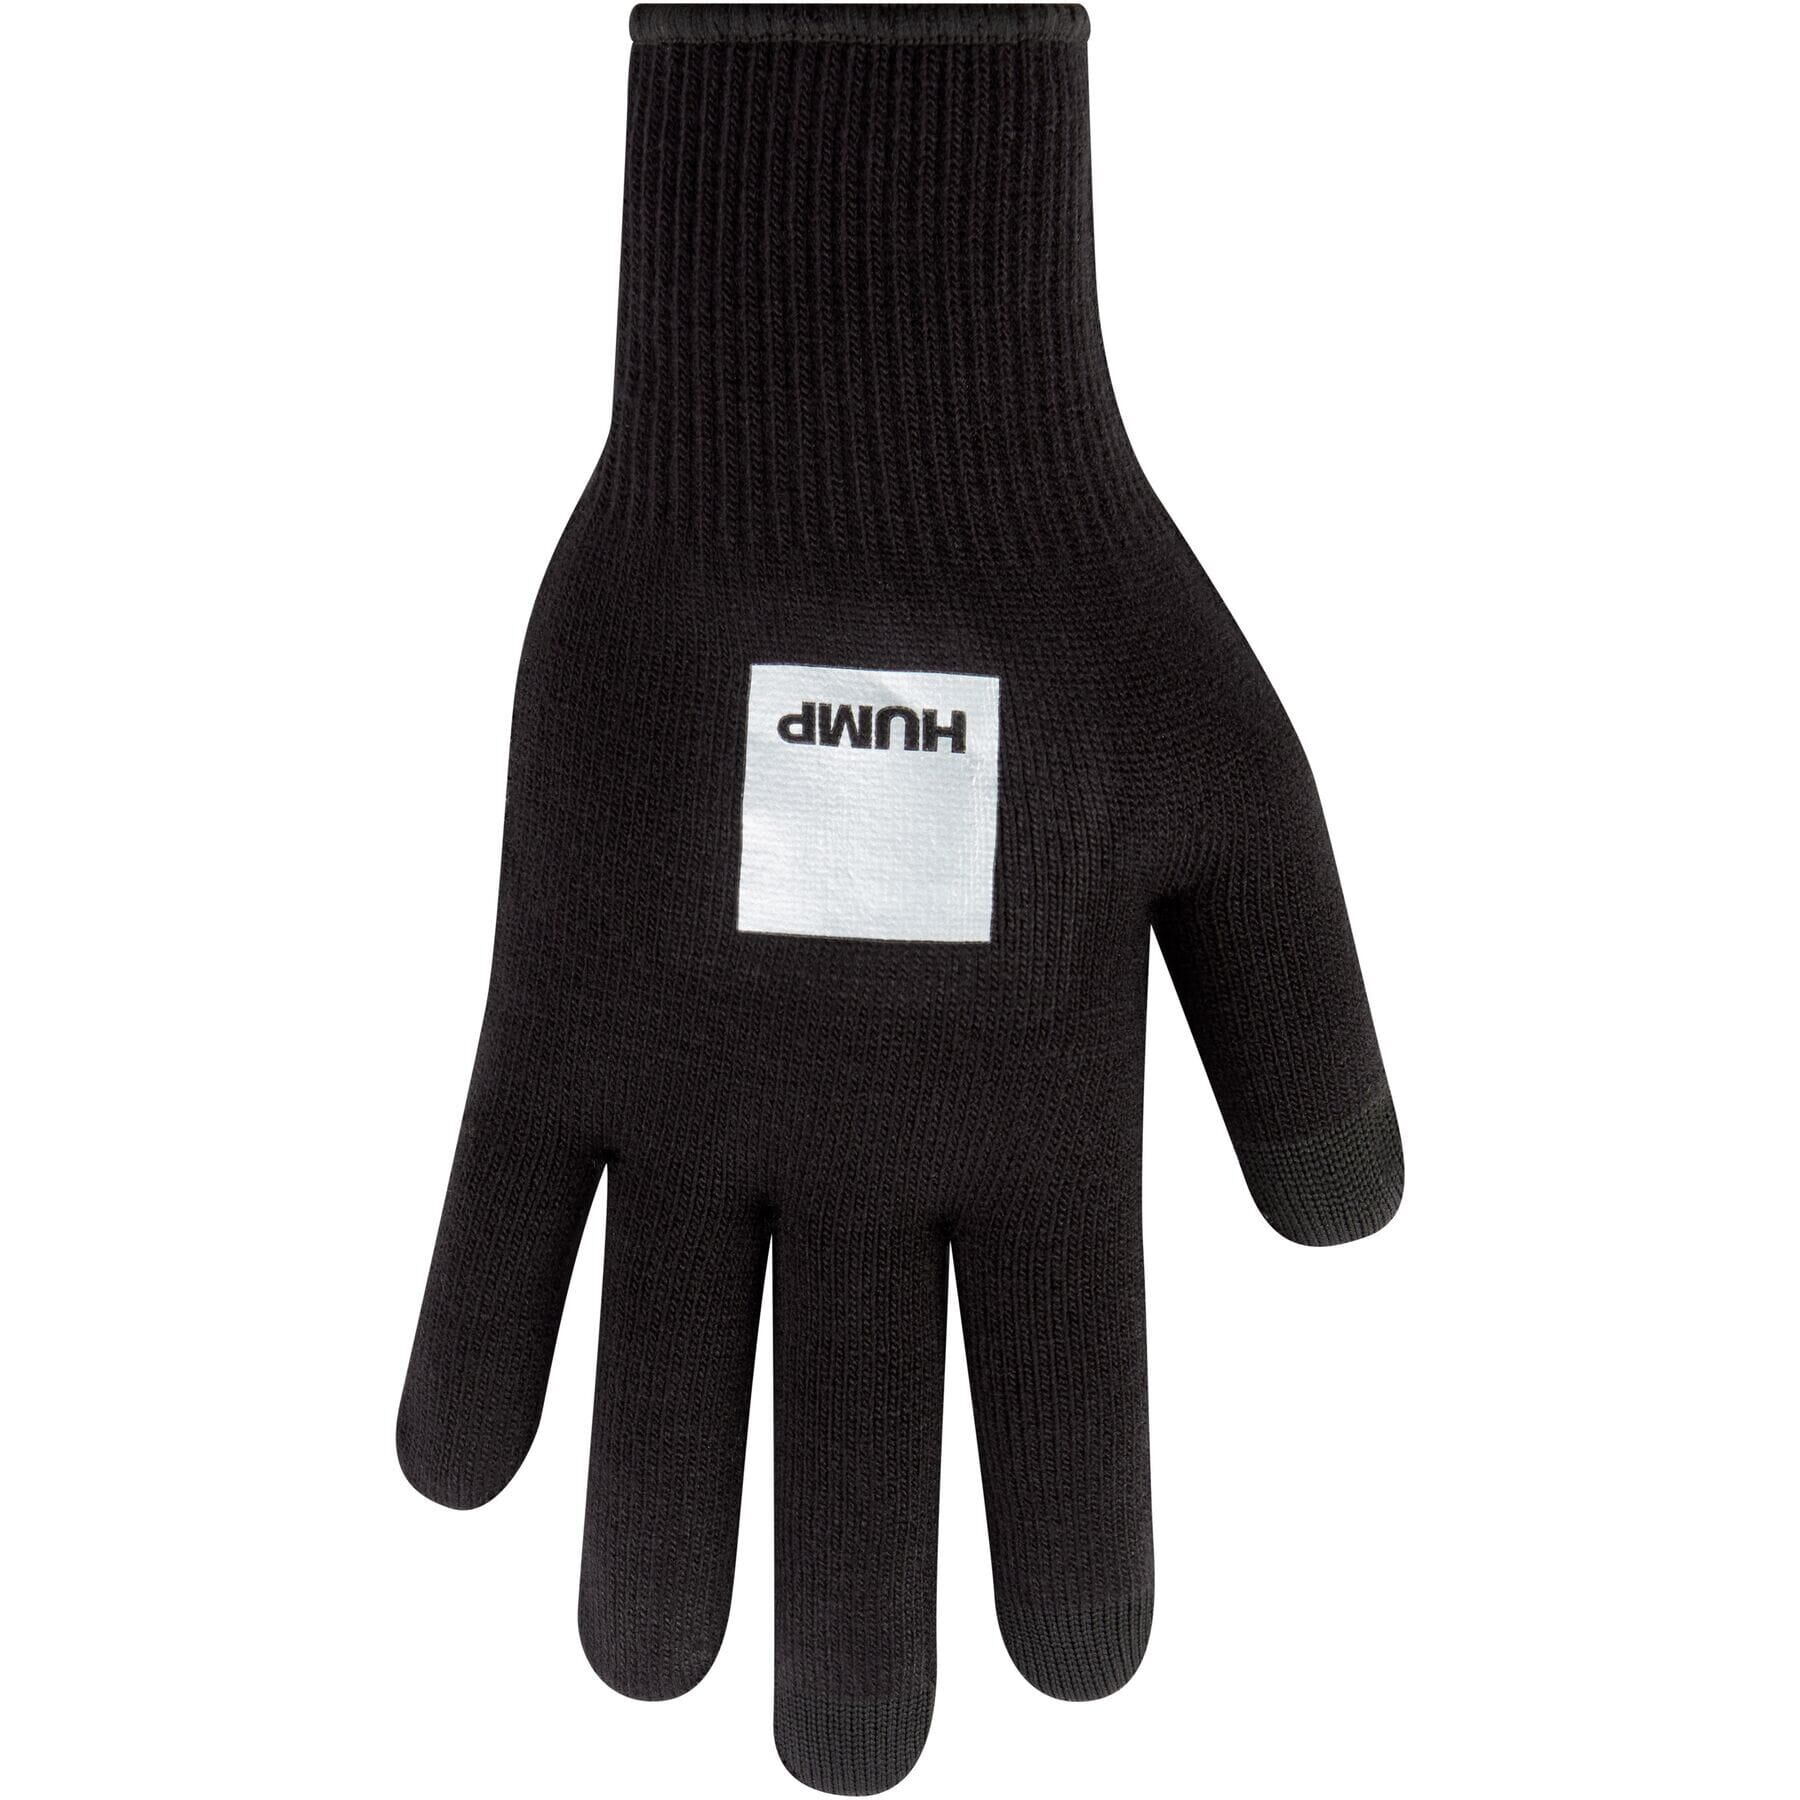 HUMP HUMP Pocket Thermal Glove - Black - X-Small - Small